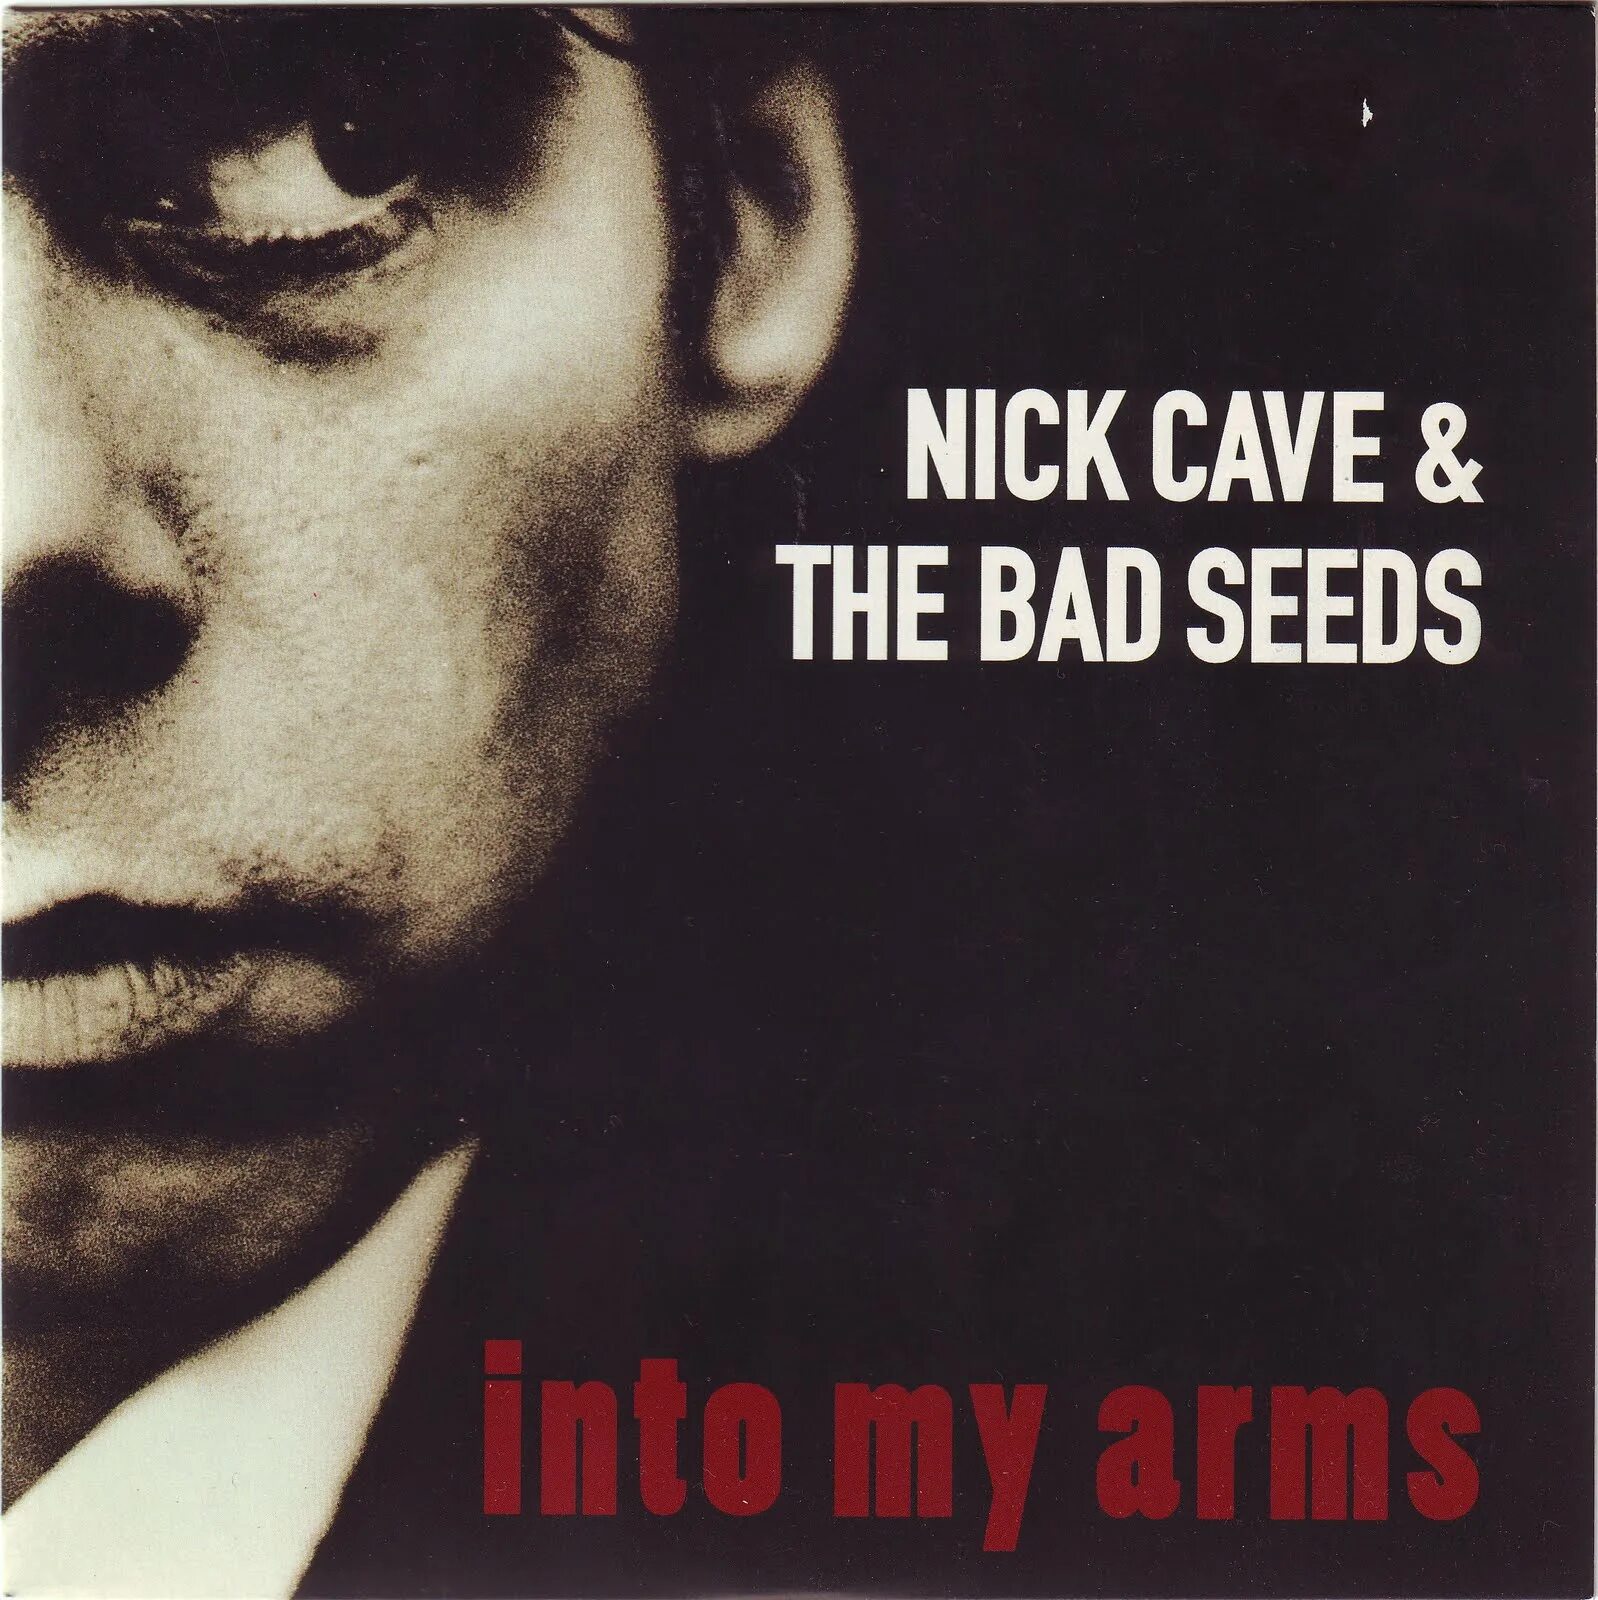 Nick музыка. Ник Кейв & the Bad Seeds. Nick Cave and the Bad Seeds CD. Nick Cave & the Bad Seeds the Boatman's Call обложка. "Nick Cave & the Bad Seeds" "into my Arms".